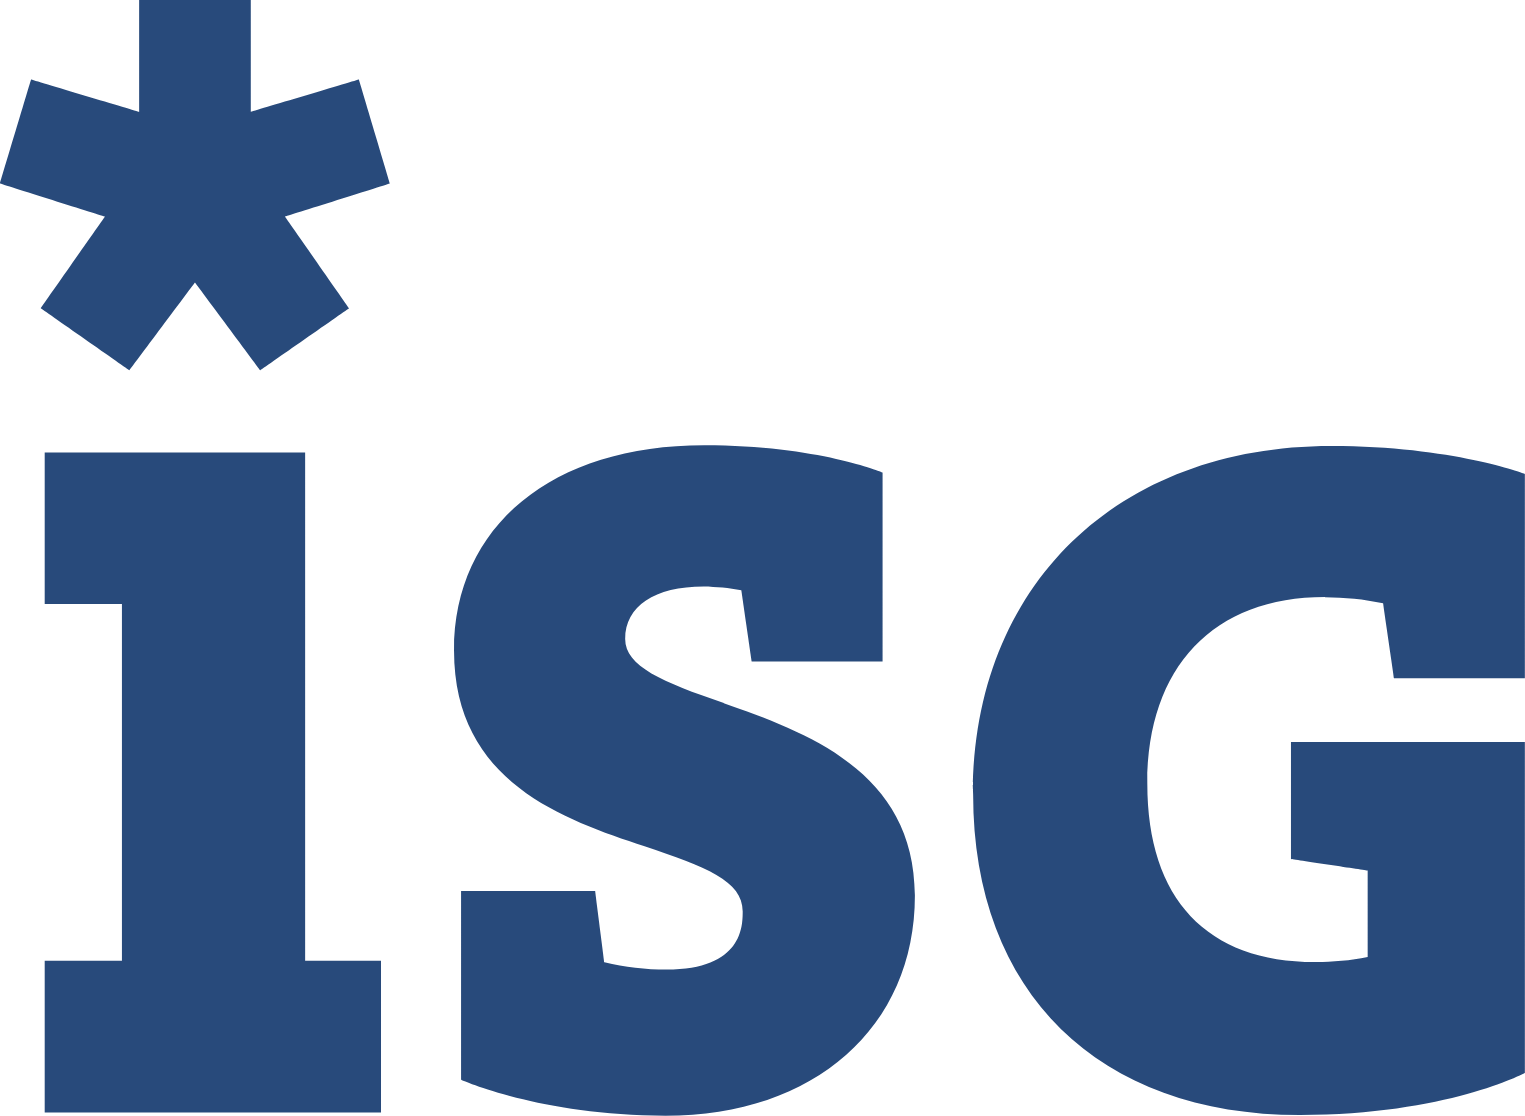 Information Services Group logo (PNG transparent)